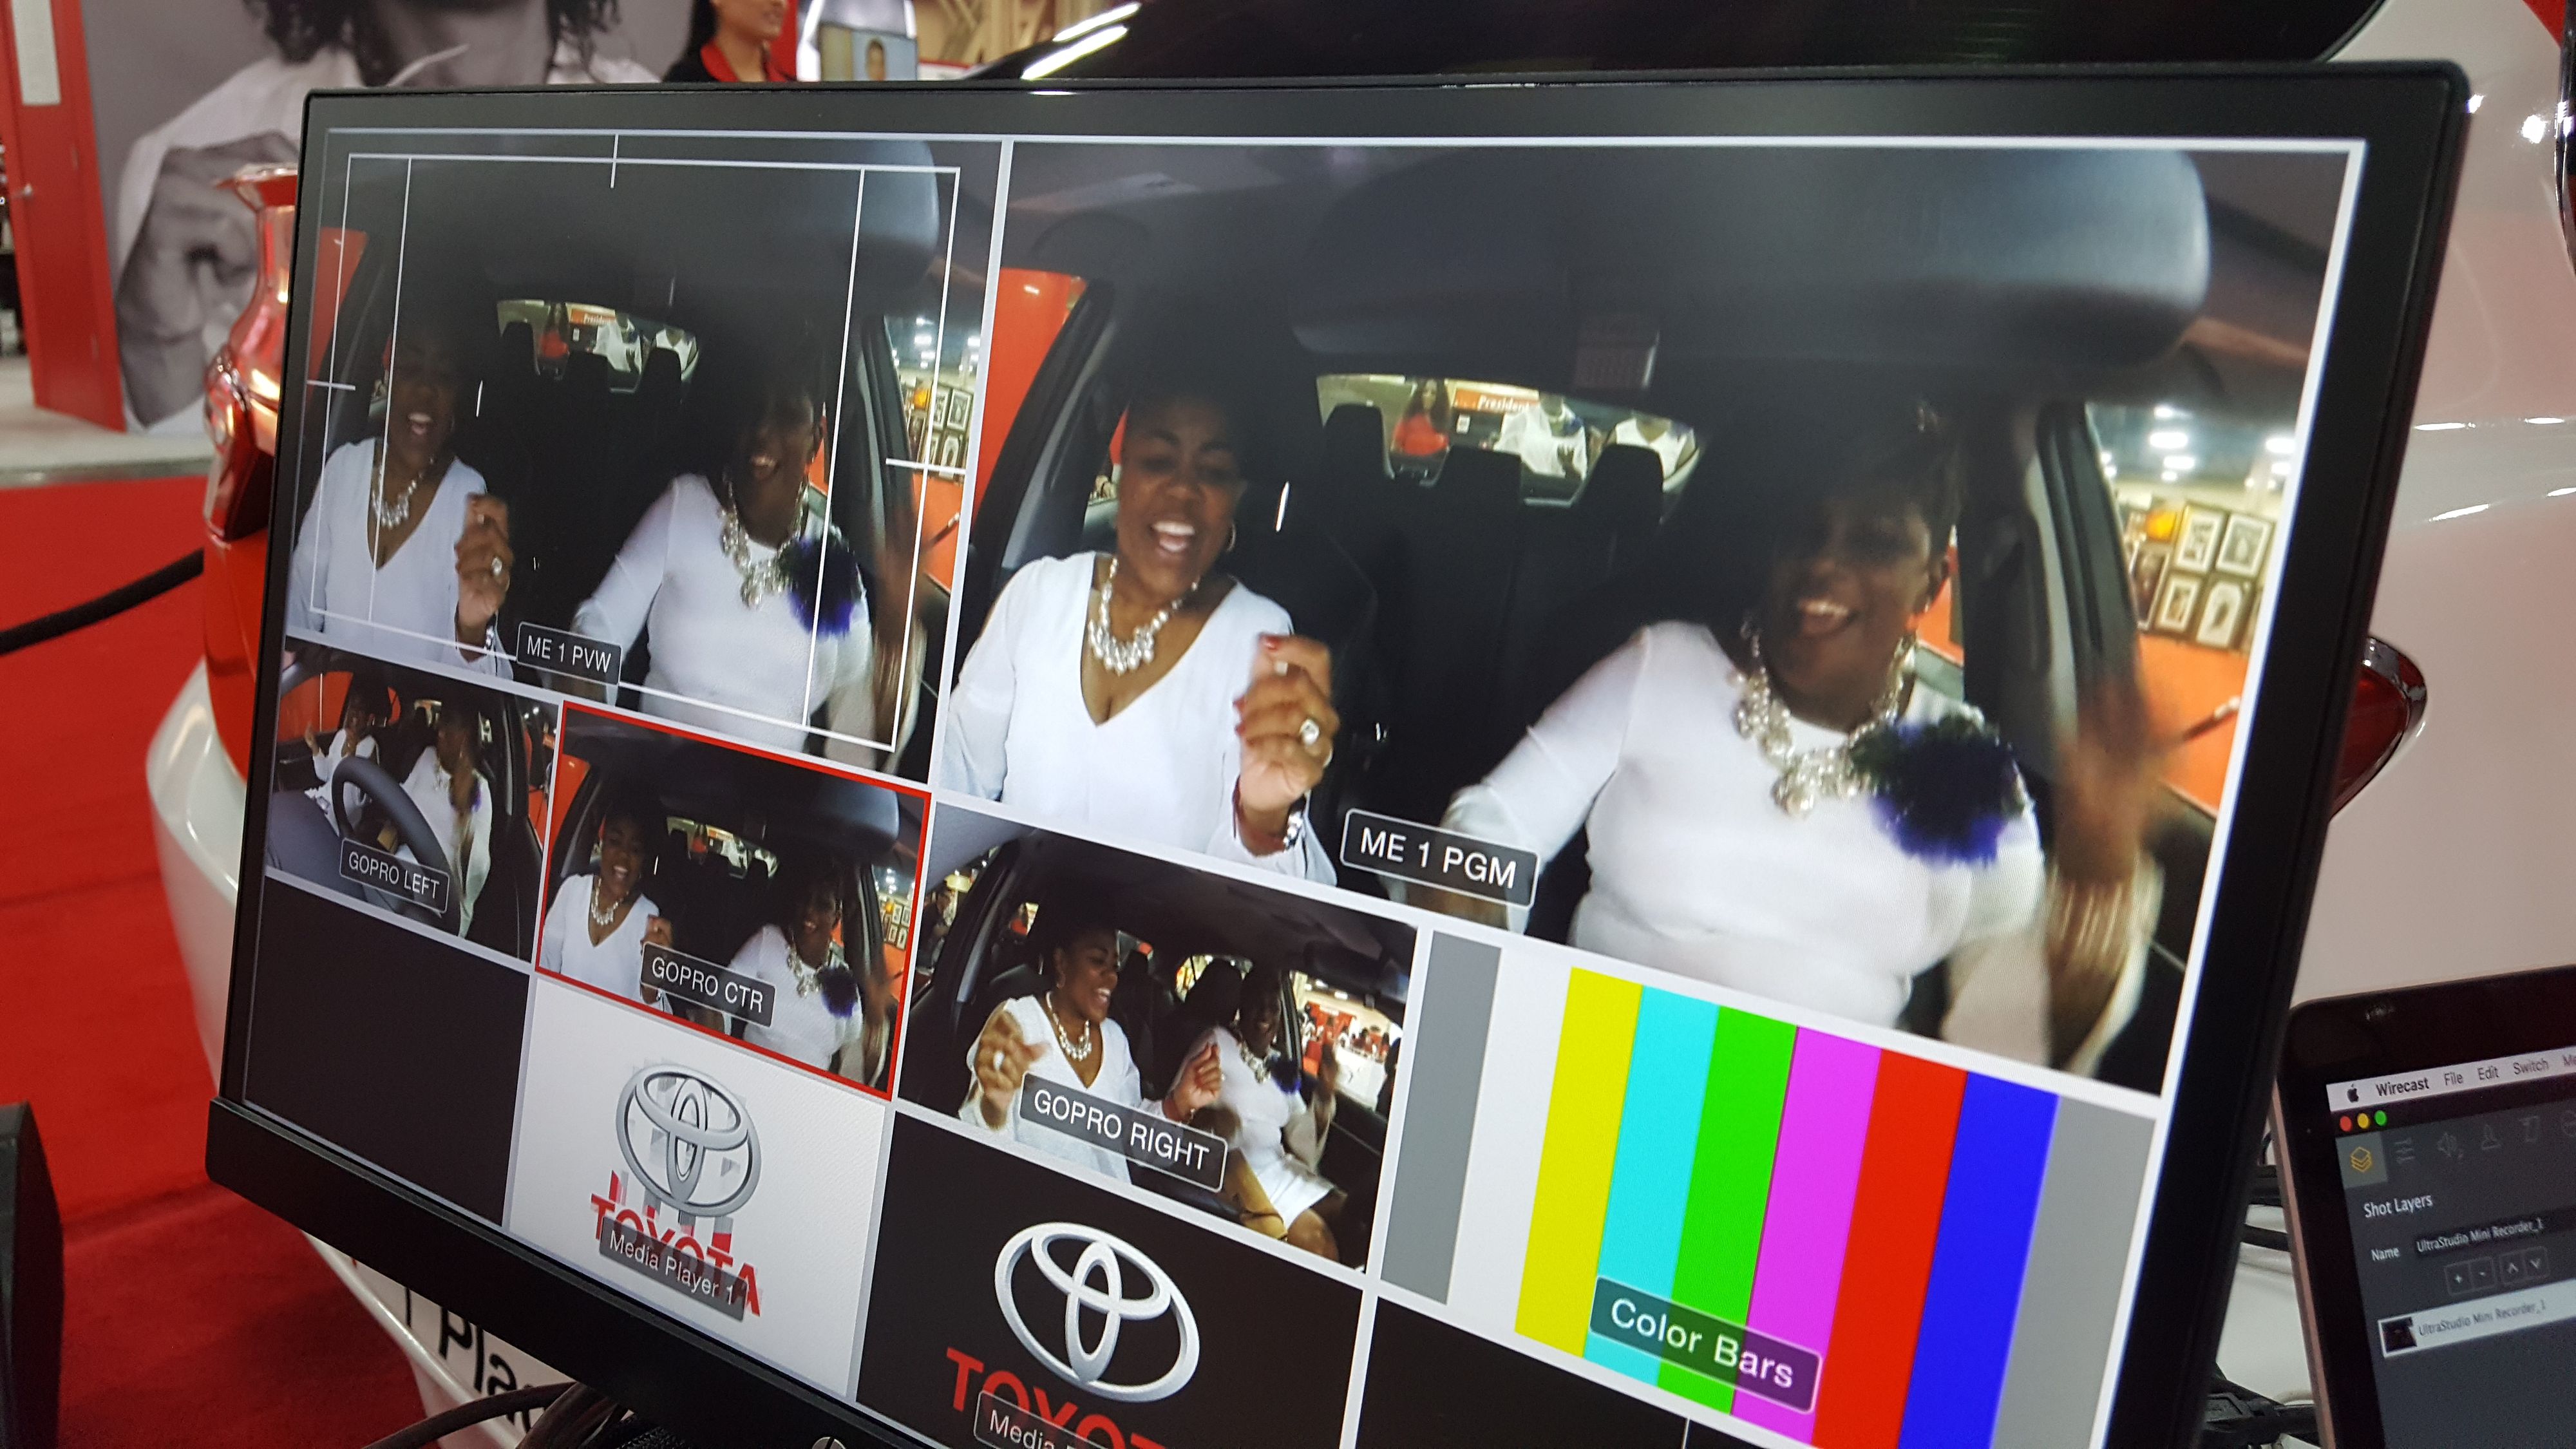 Video Switcher from a Toyota Carpool Karaoke Event in St. Louis, Missouri